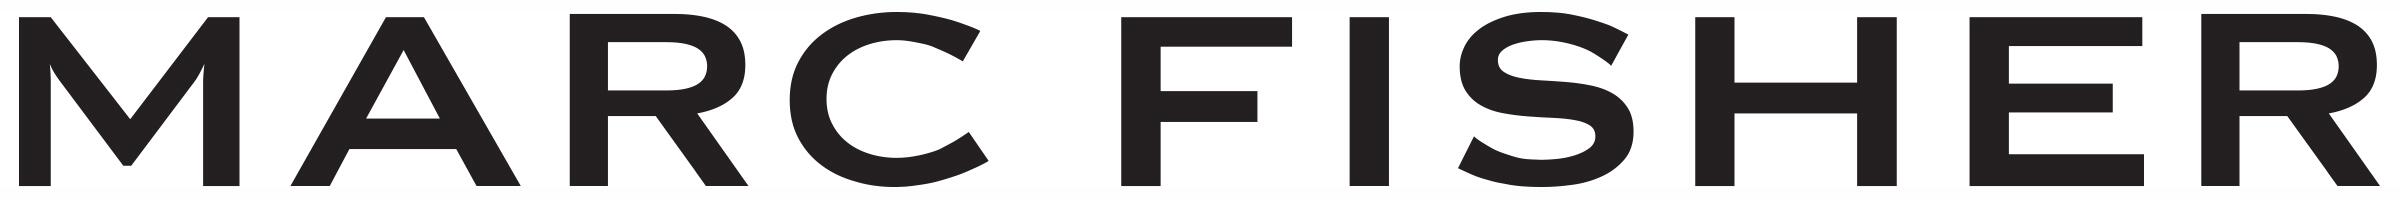 marc fisher logo